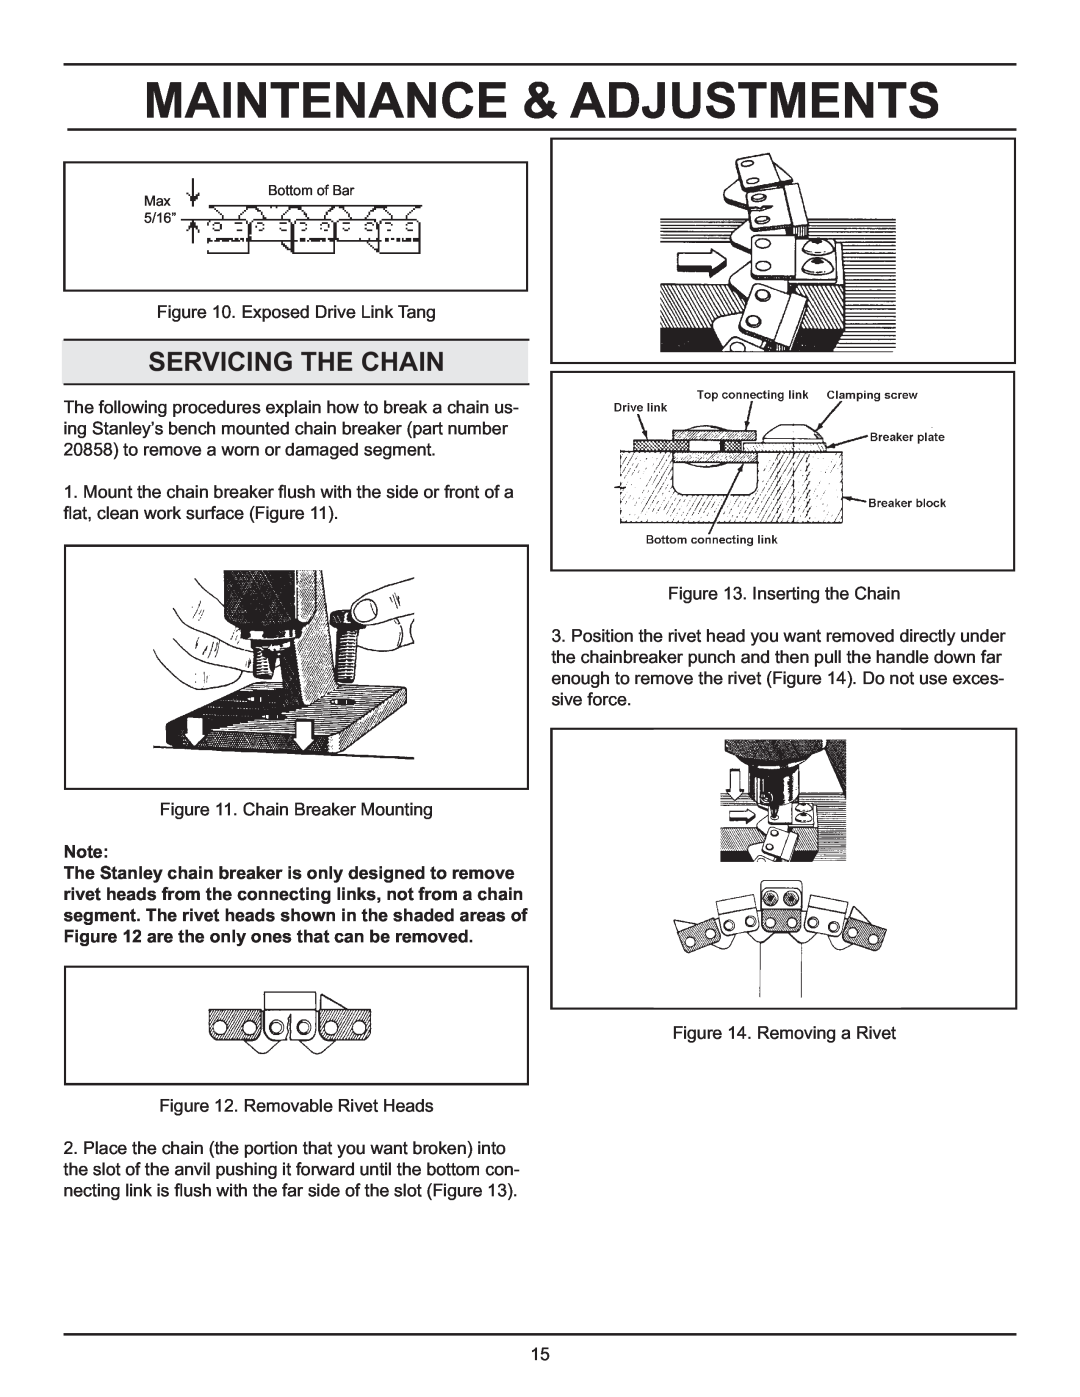 Stanley Black & Decker DS06 manual Servicing The Chain, Maintenance & Adjustments 